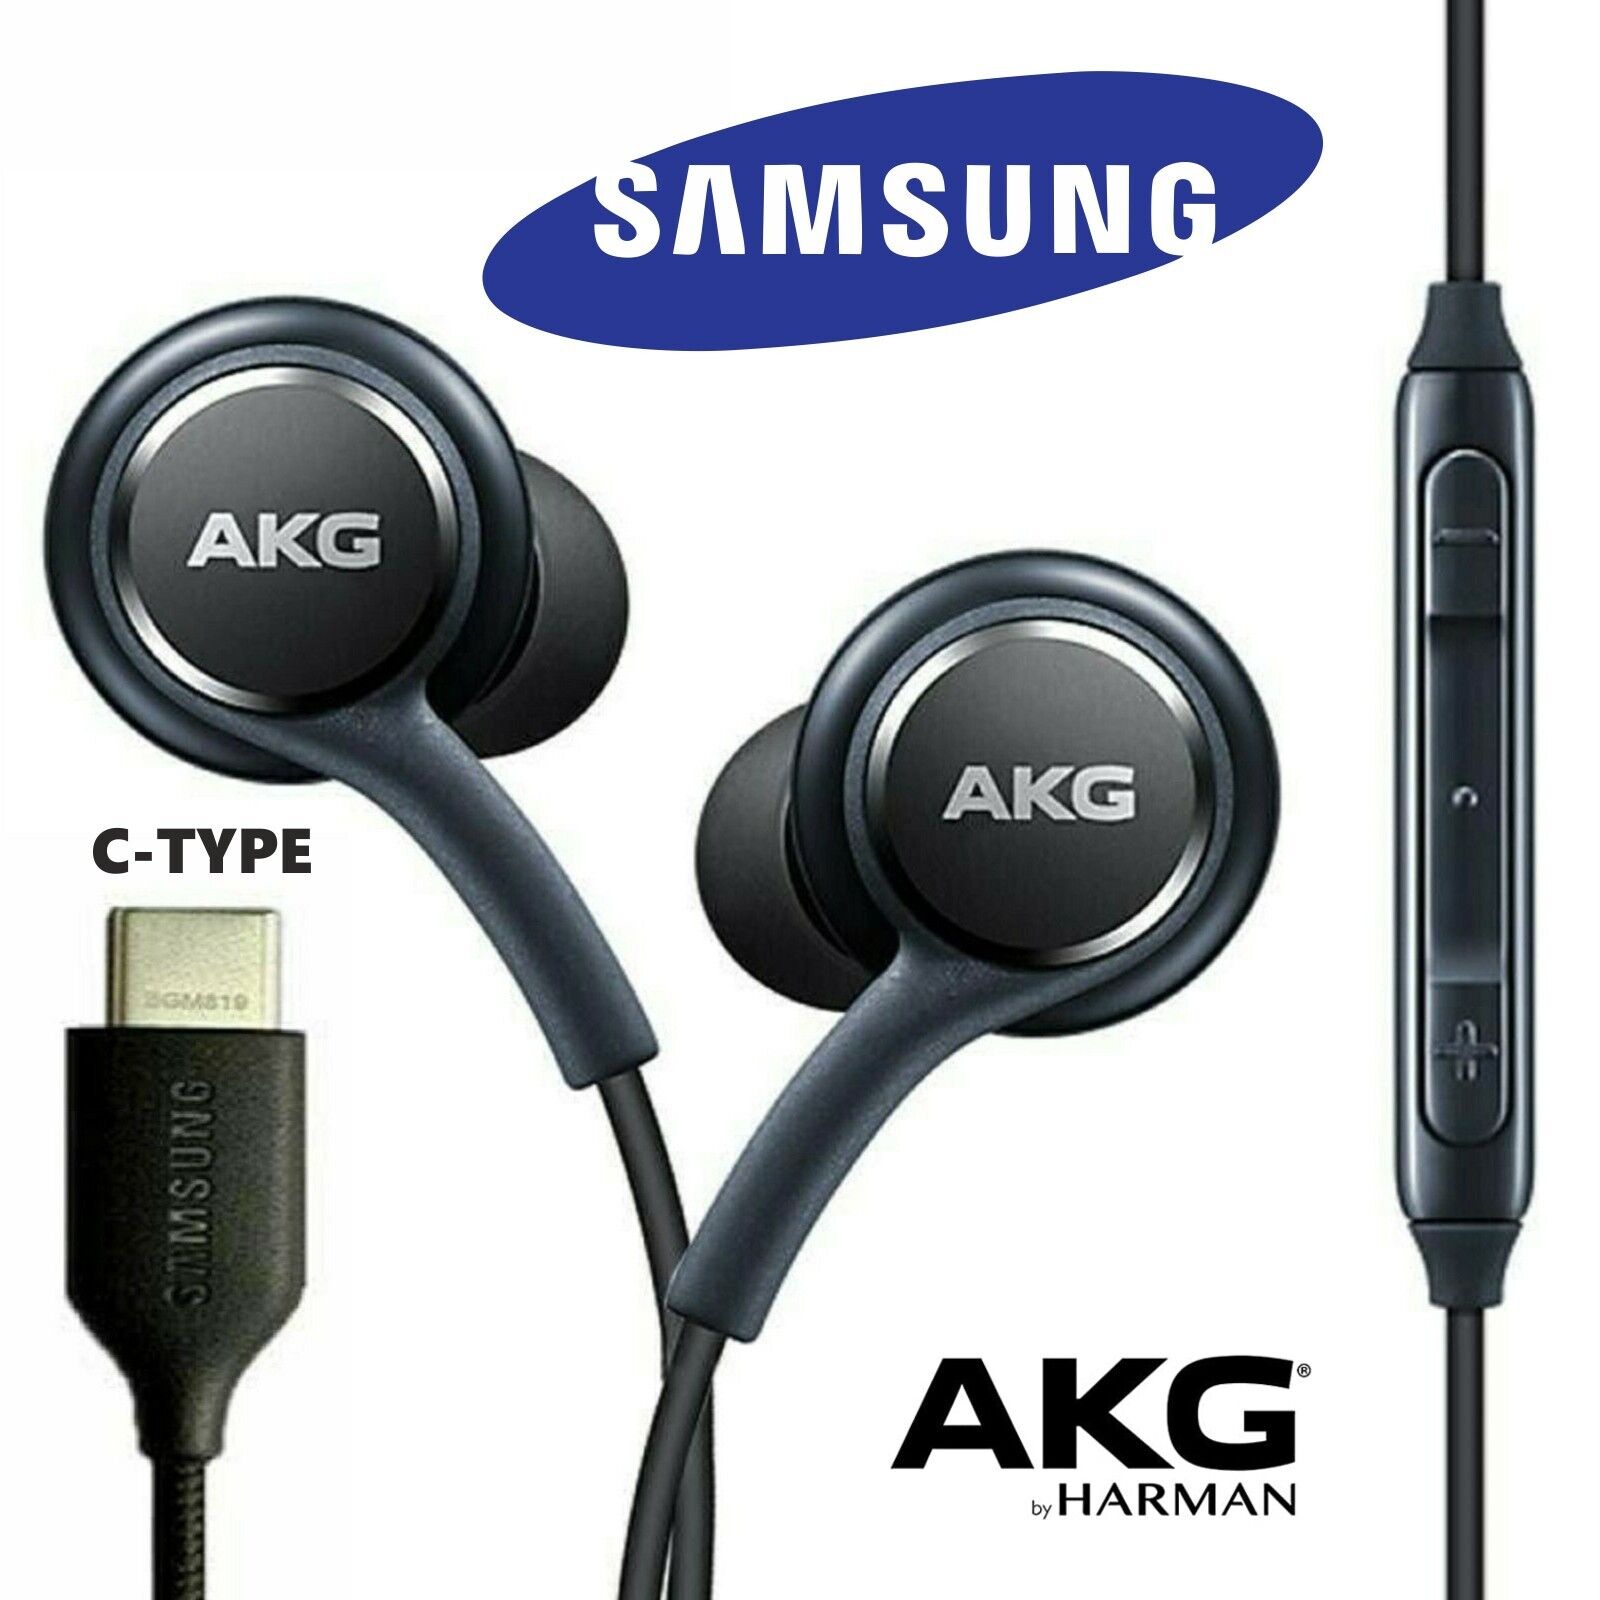 AKG USB In-Ear Earphones for Samsung